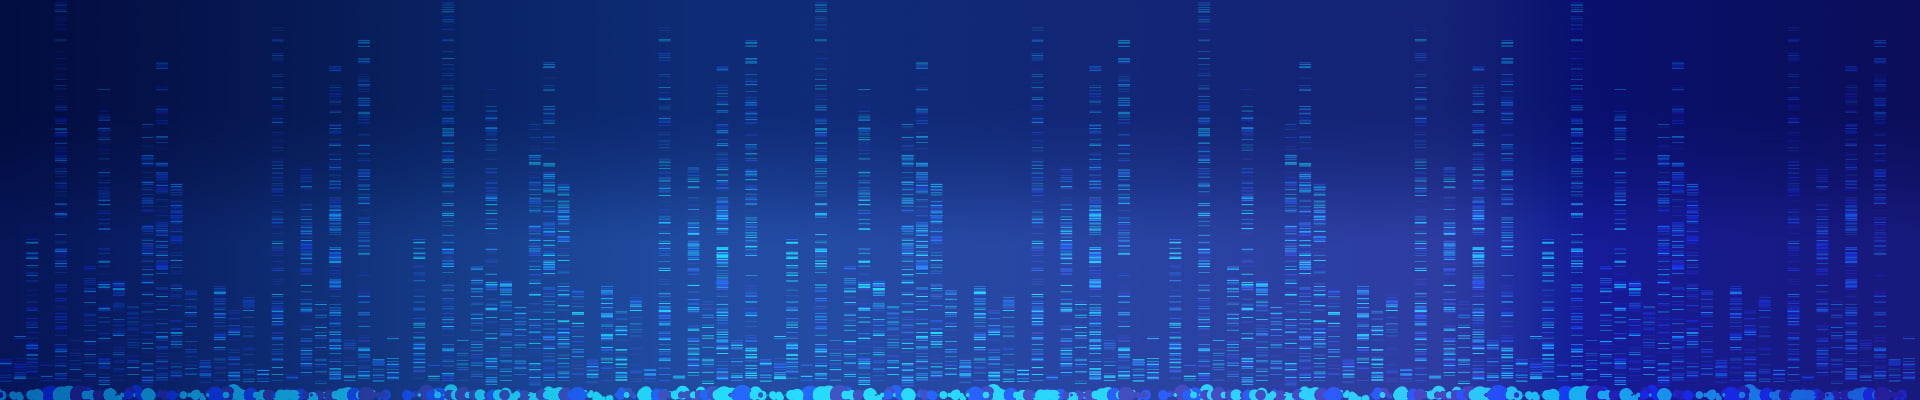 ORF cDNA Clones and Custom Clones Banner